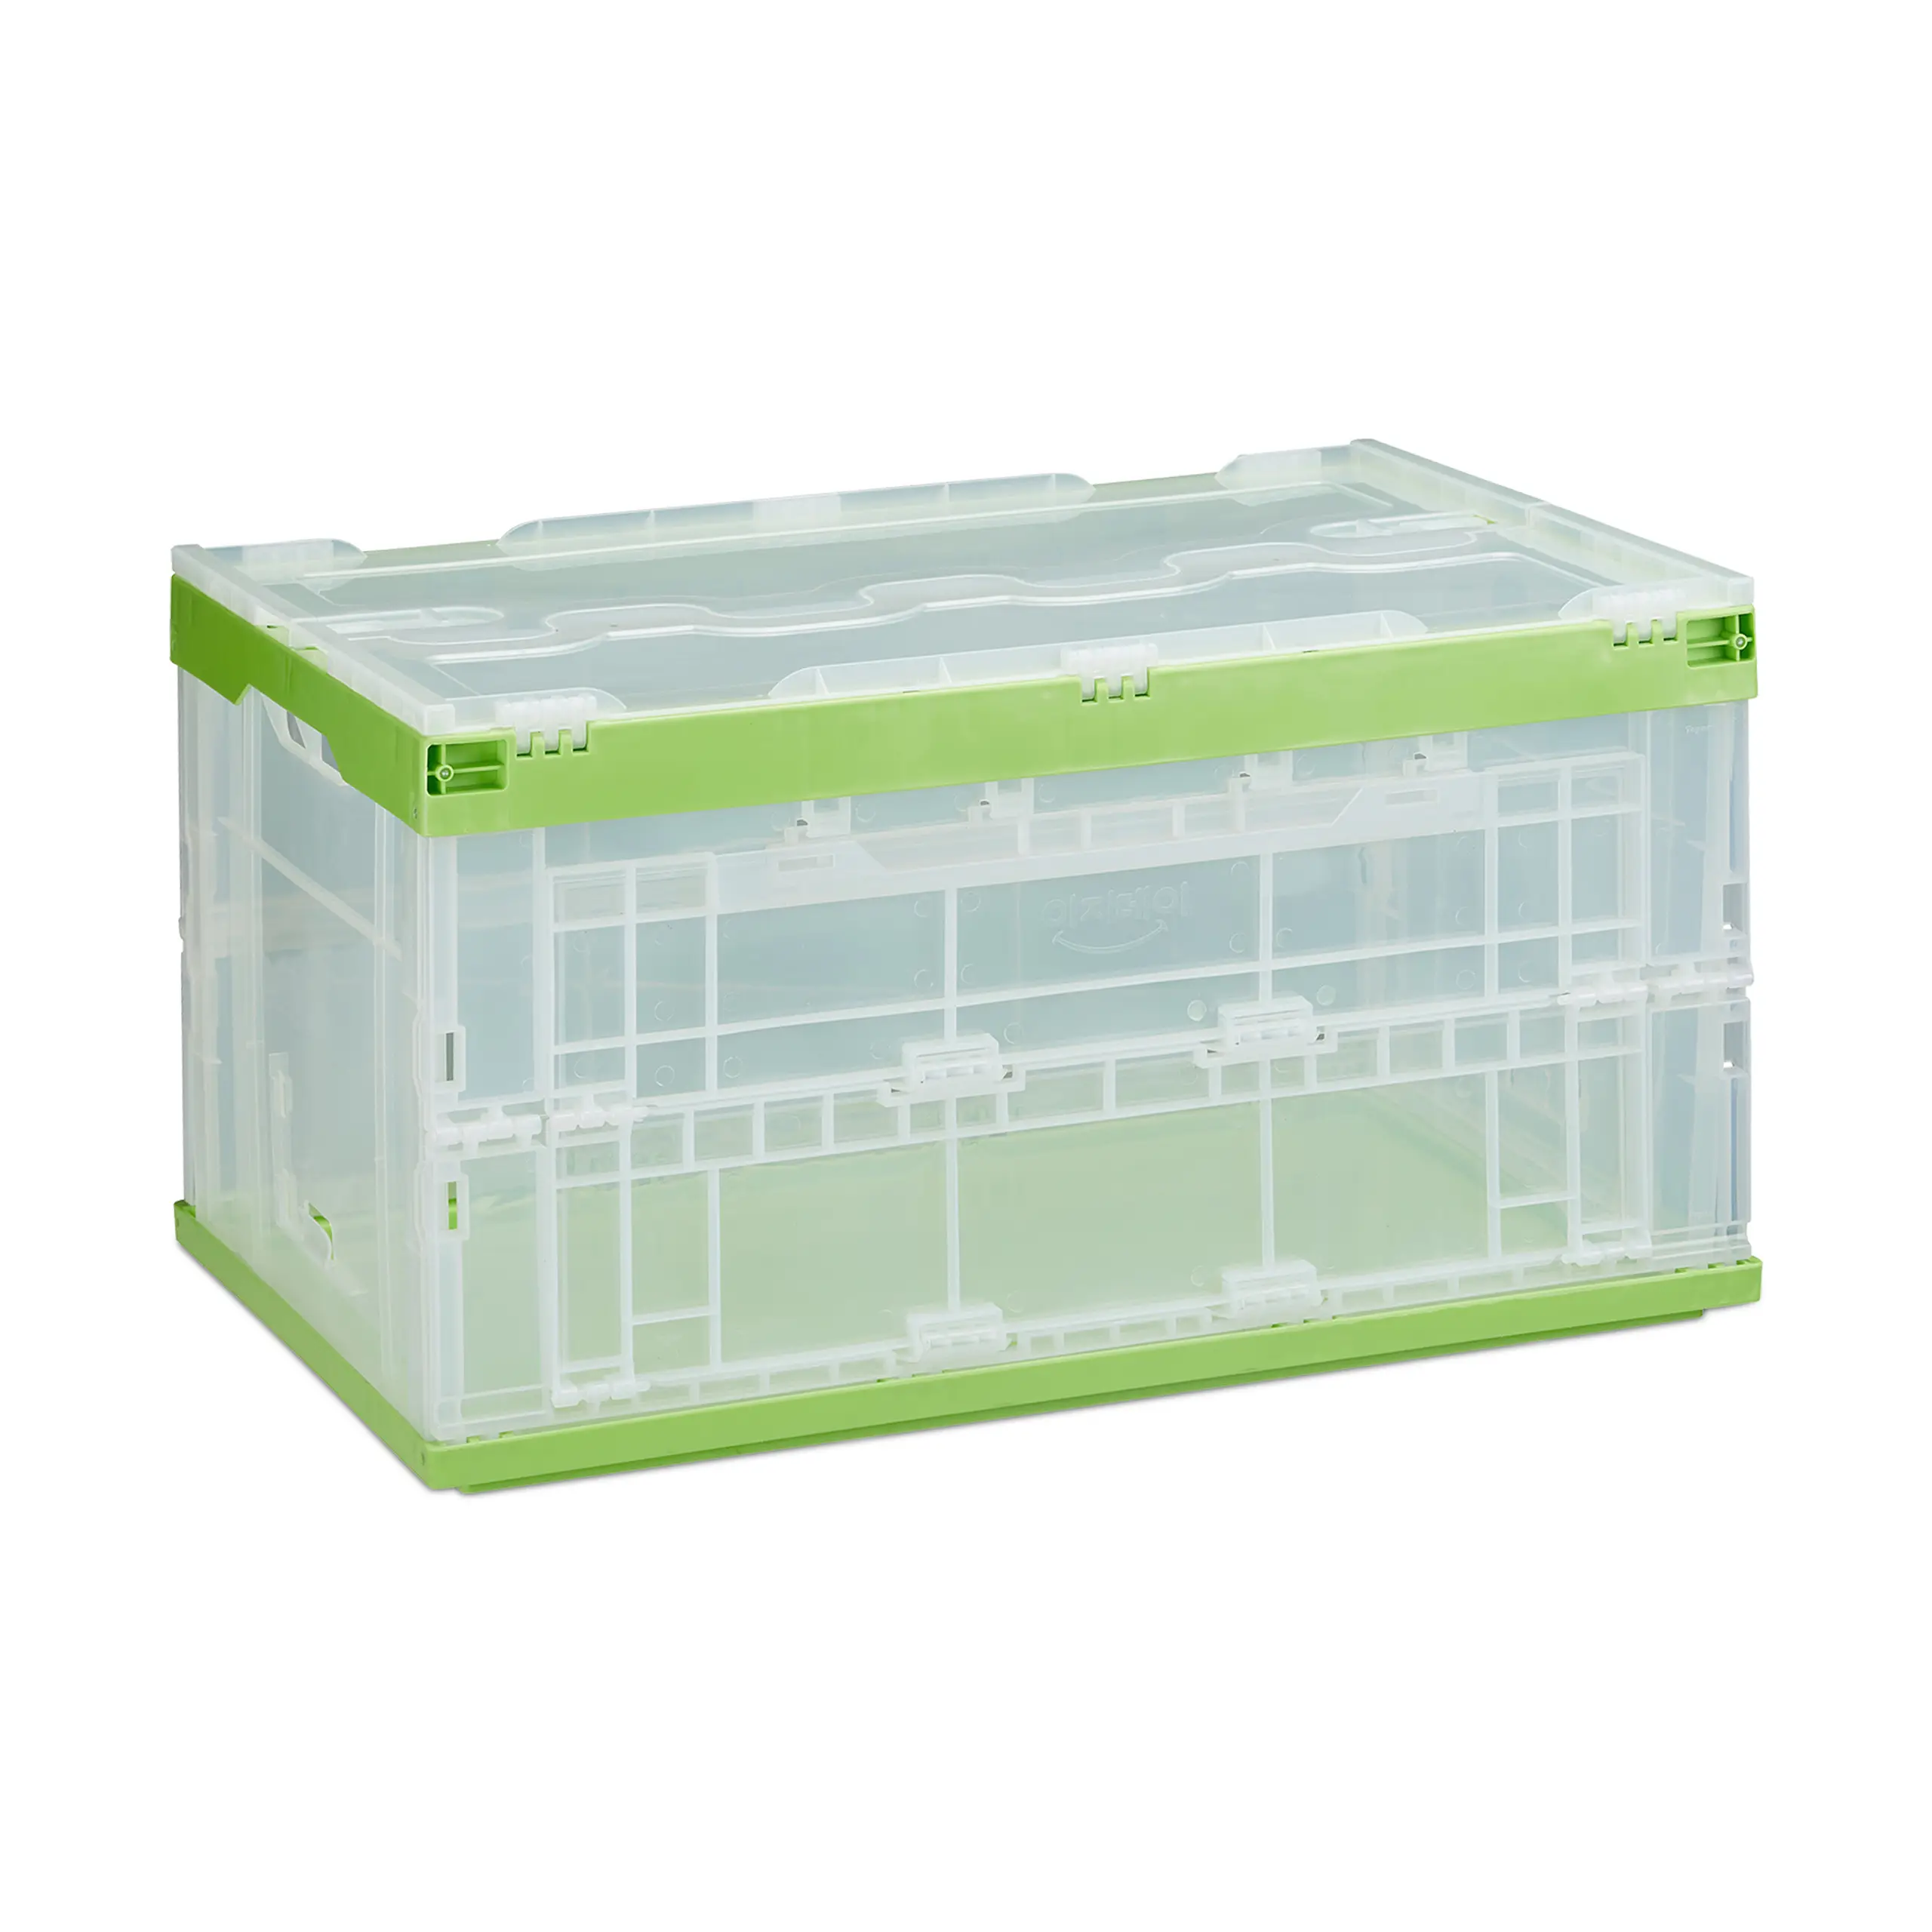 1 x Transportbox Deckel gr眉n-transparent